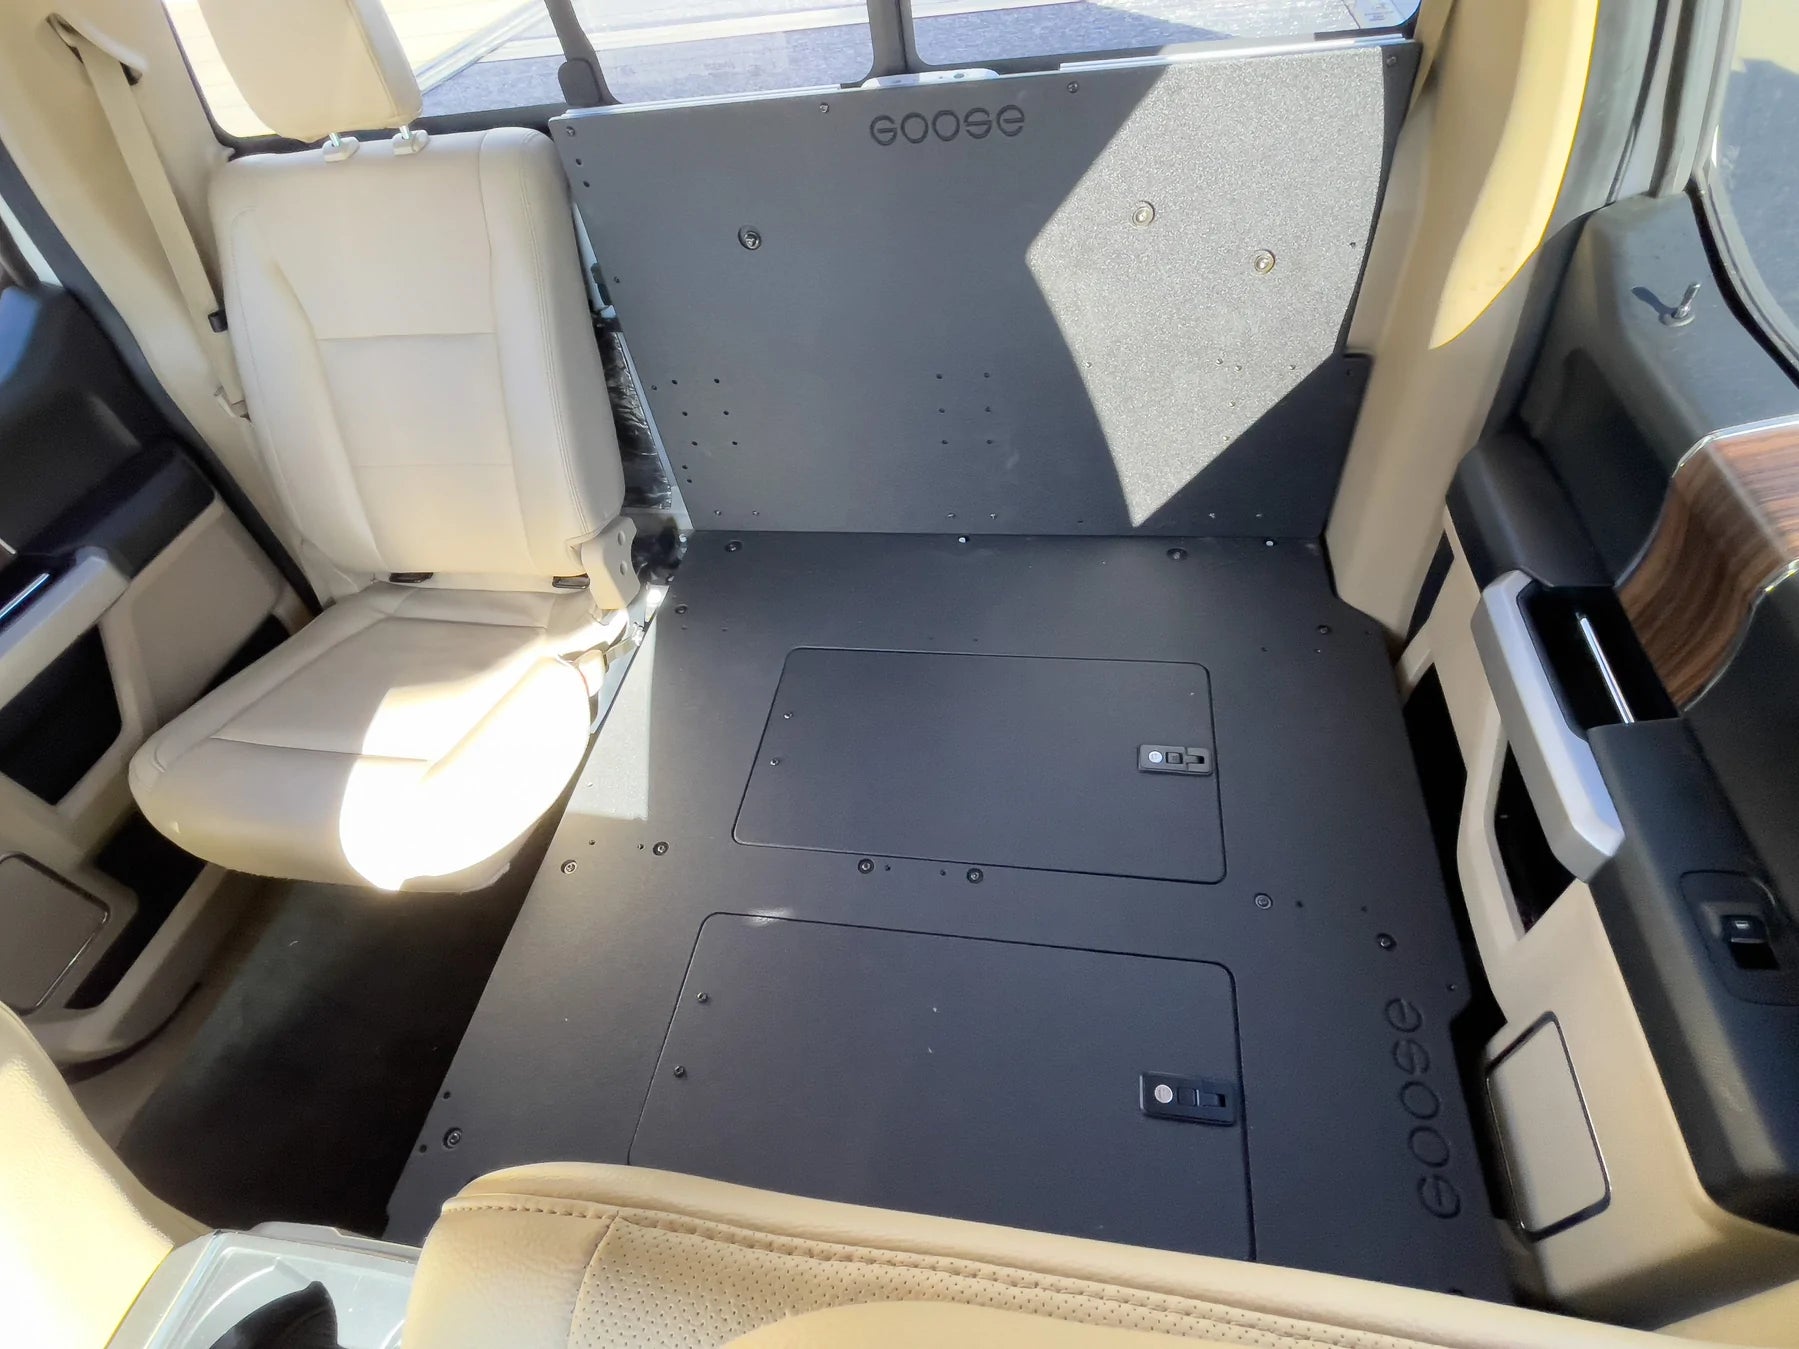 Ford Super Duty F250, F350, & F450 2017-Present 4th Gen Crew Cab - Second Row Seat Delete Plate System